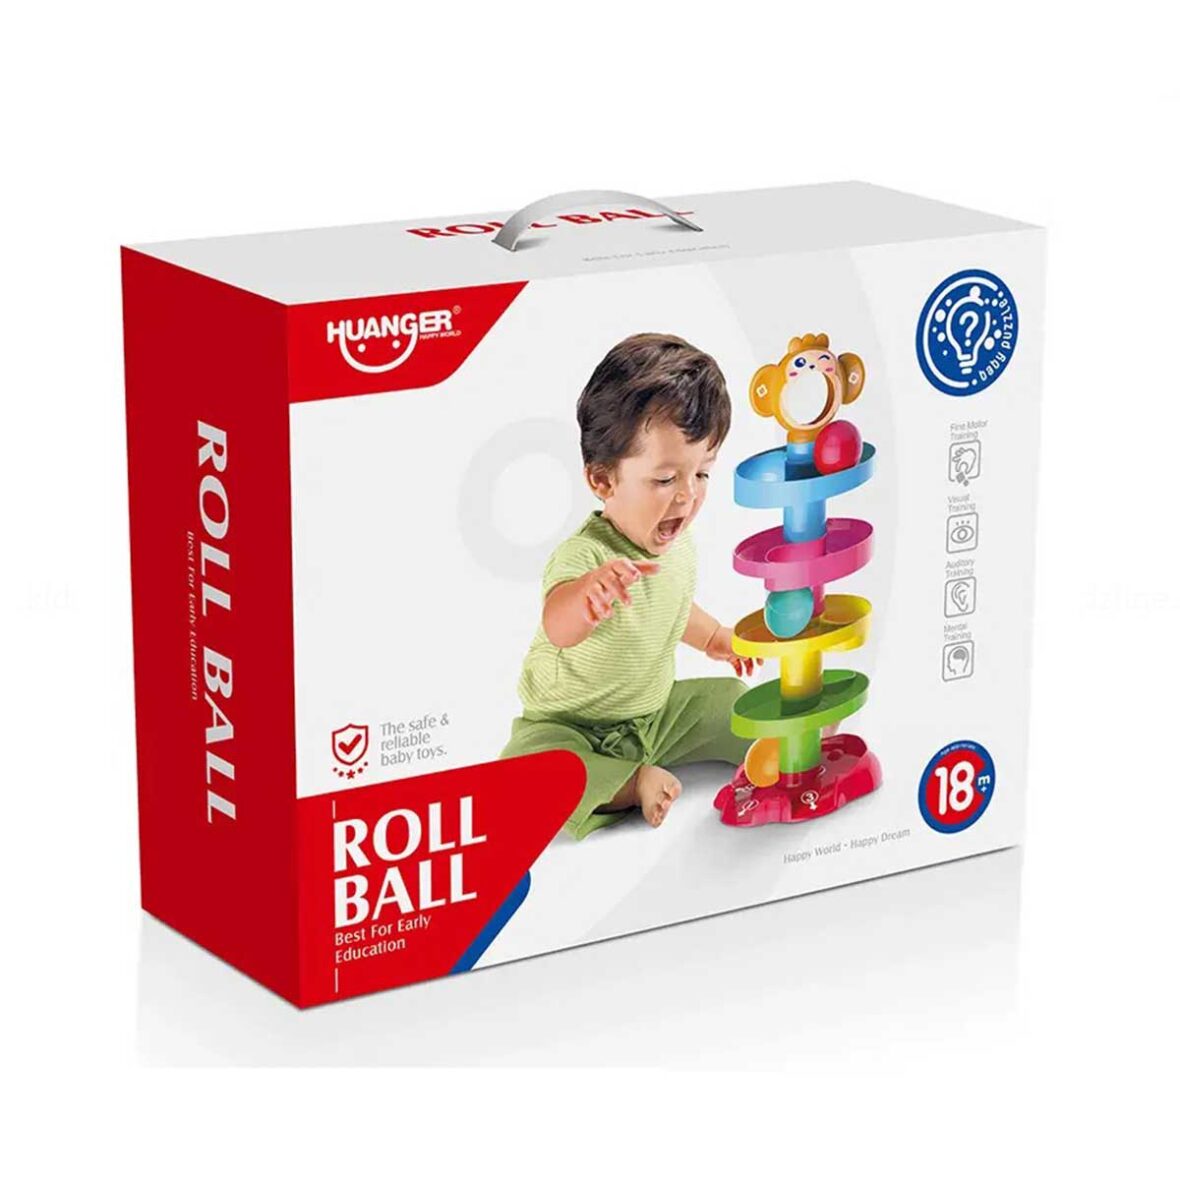 Roll Ball Toy Monkey Design